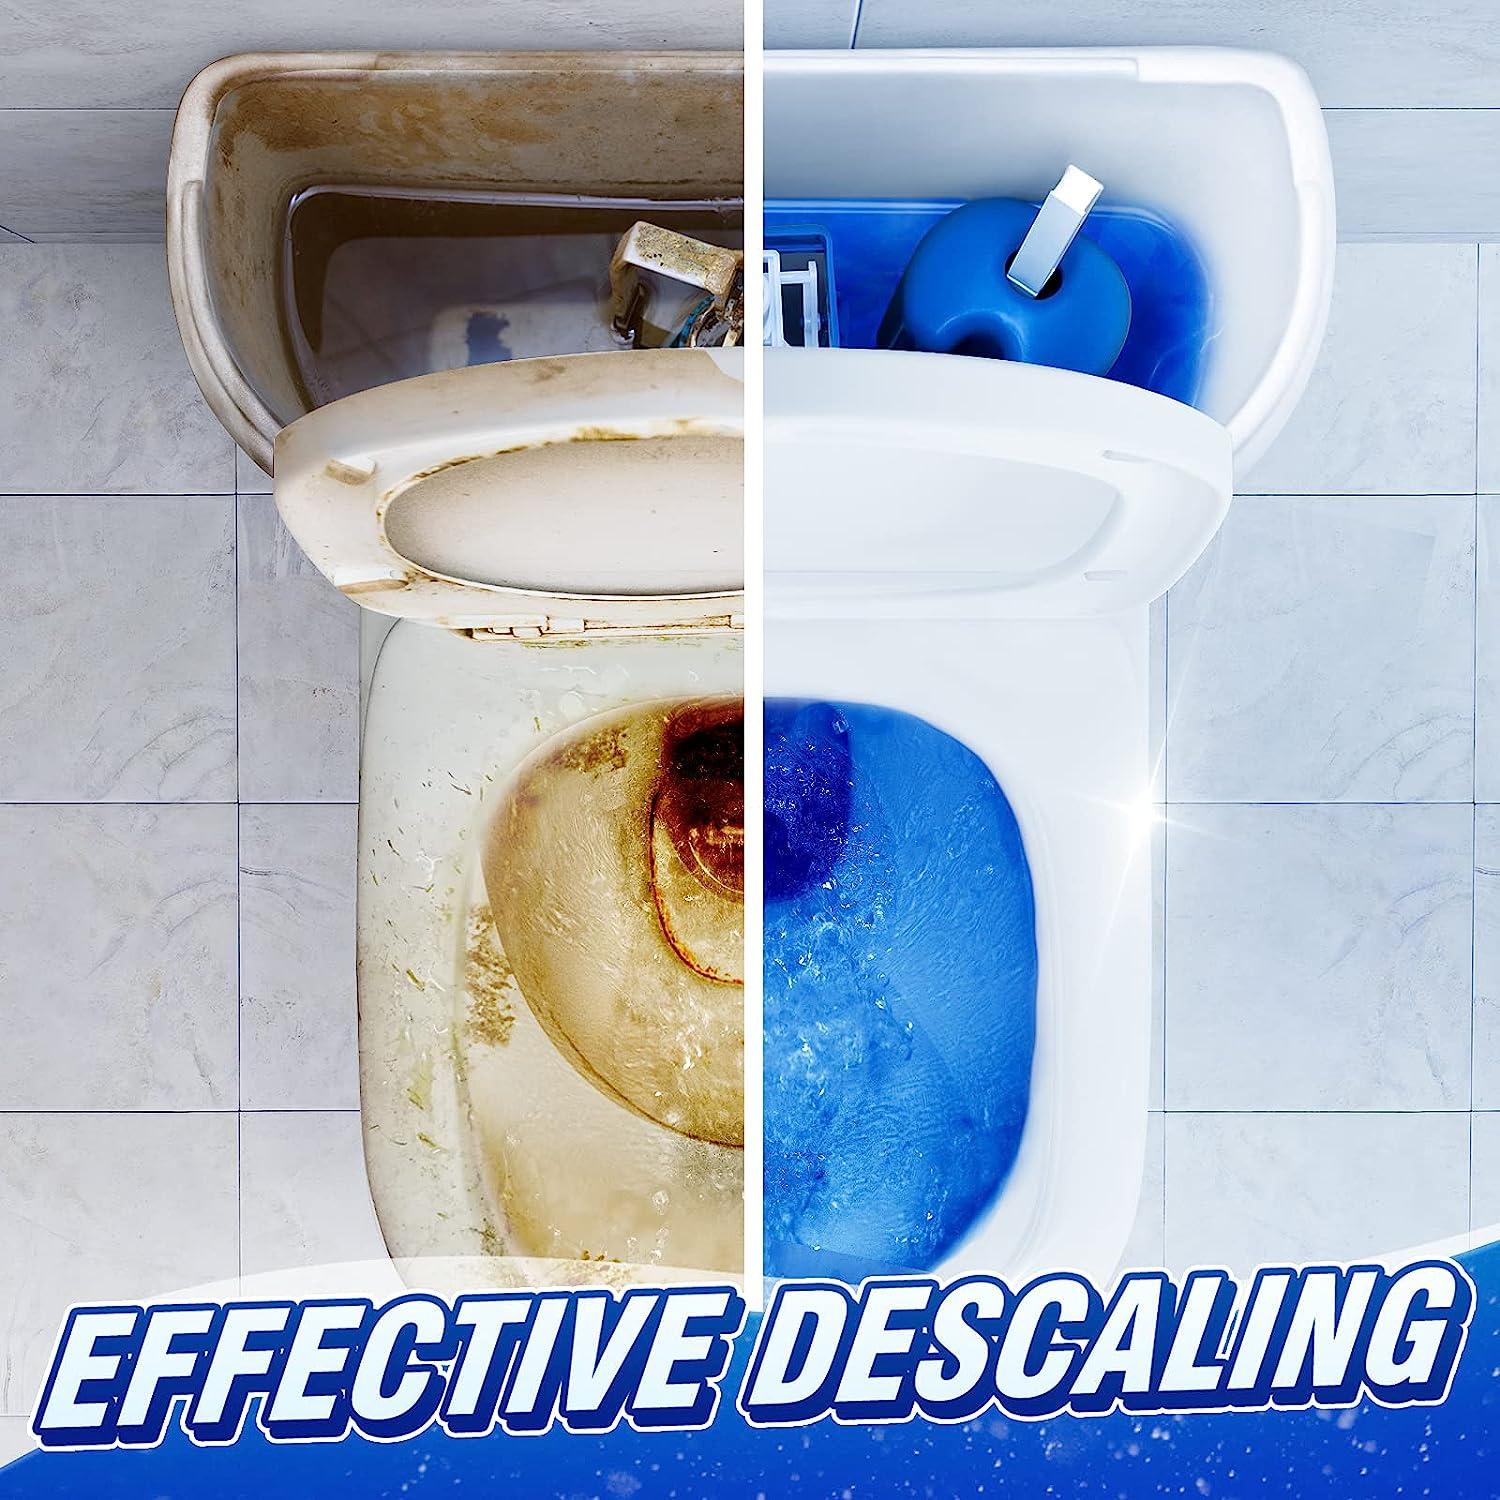 Dissolving Toilet Scrubbing System